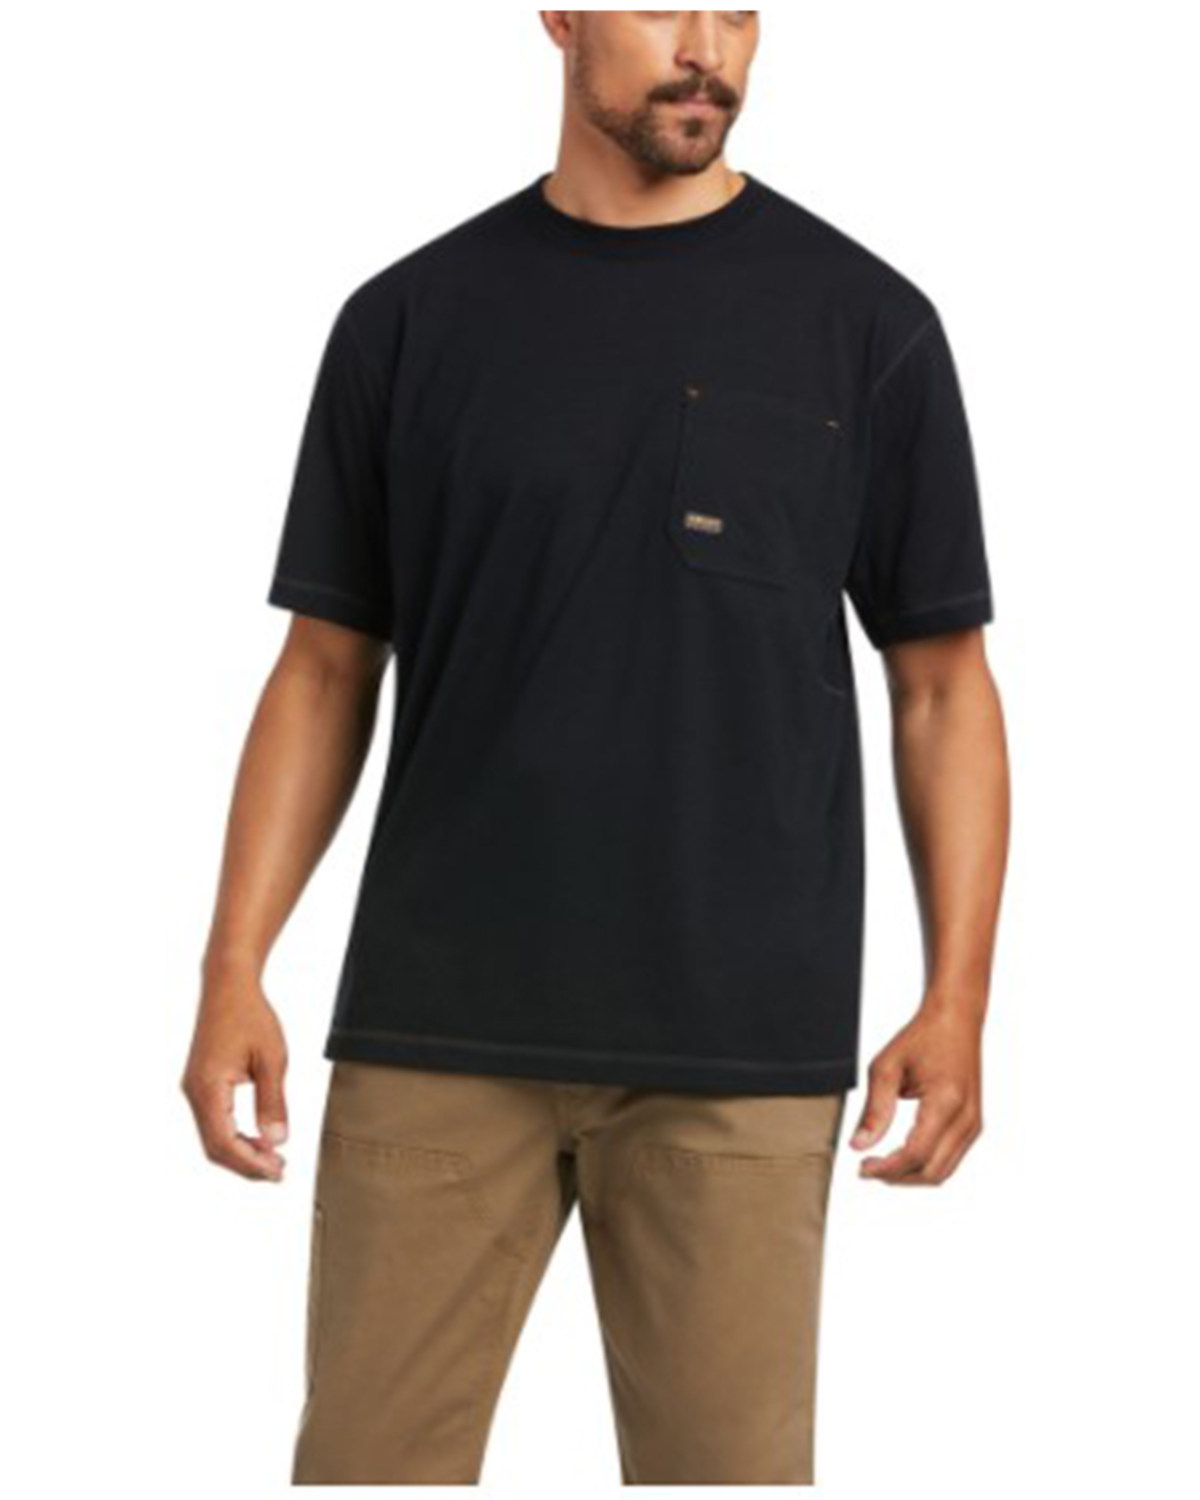 Ariat Men's Black Rebar Workman Reflective Flag Graphic Short Sleeve Work T-Shirt - Tall